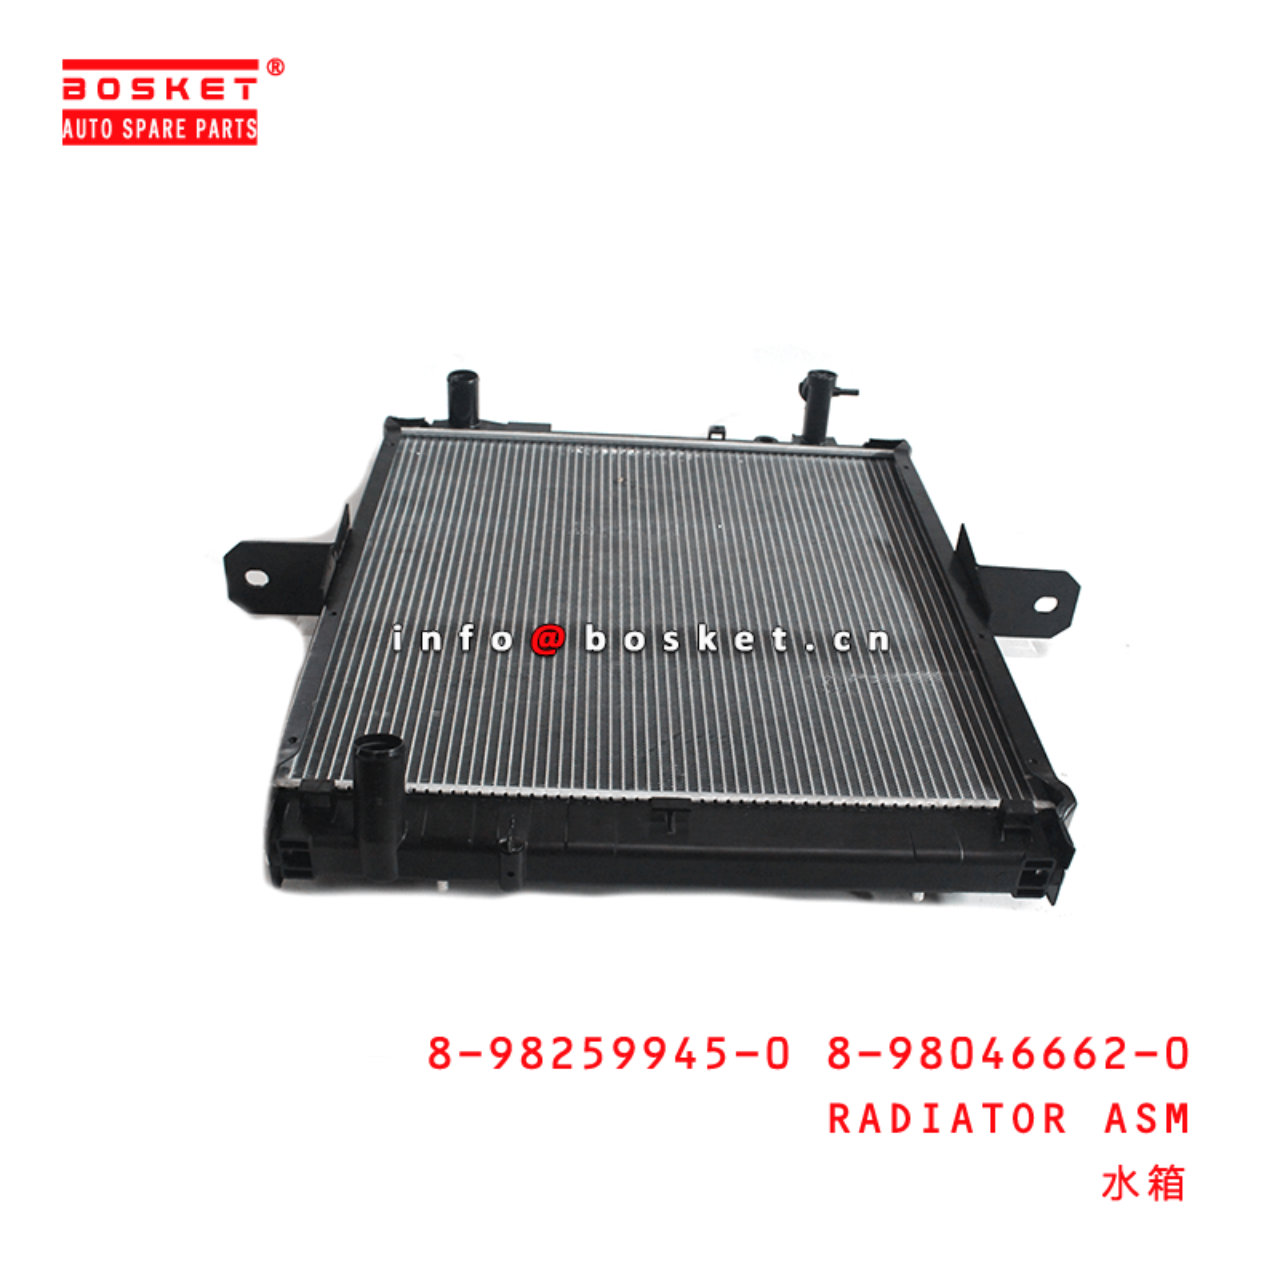 8-98259945-0 8-98046662-0 Radiator Assembly 8982599450 8980466620 Suitable for ISUZU NPR 4HK1